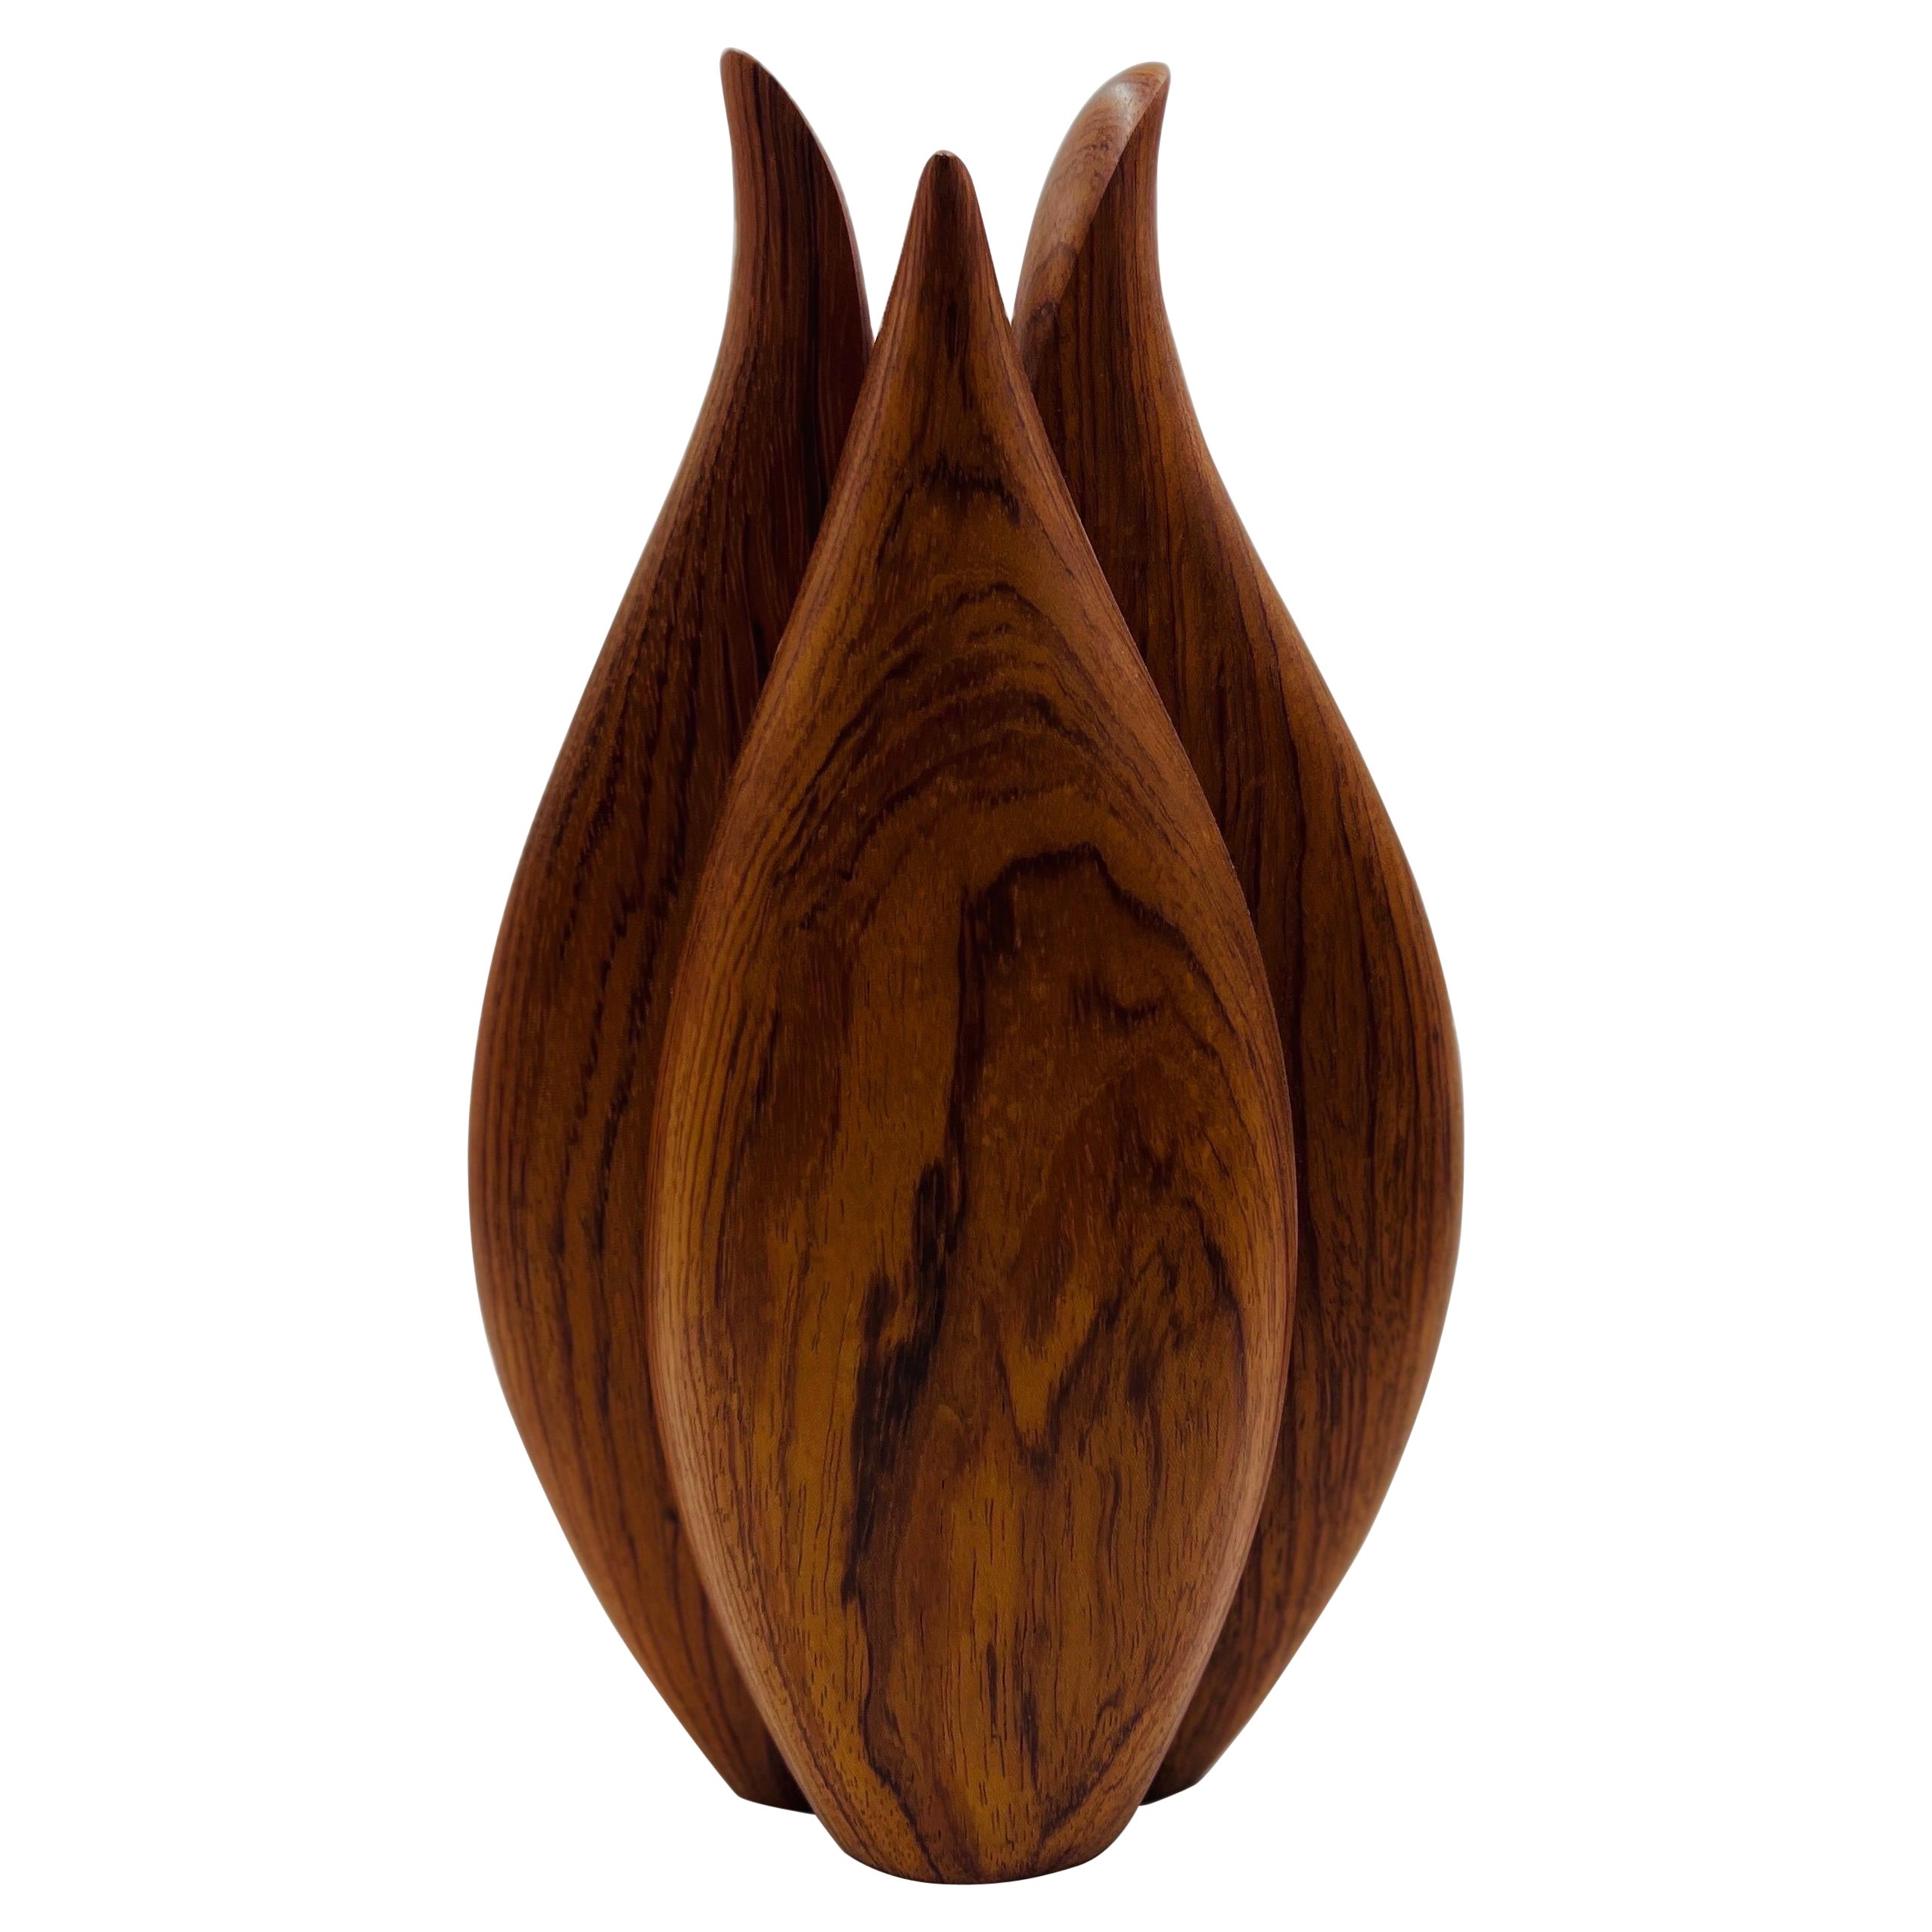 Vintage Modern Style Studio Quality Vase Featured in Teak Wood For Sale